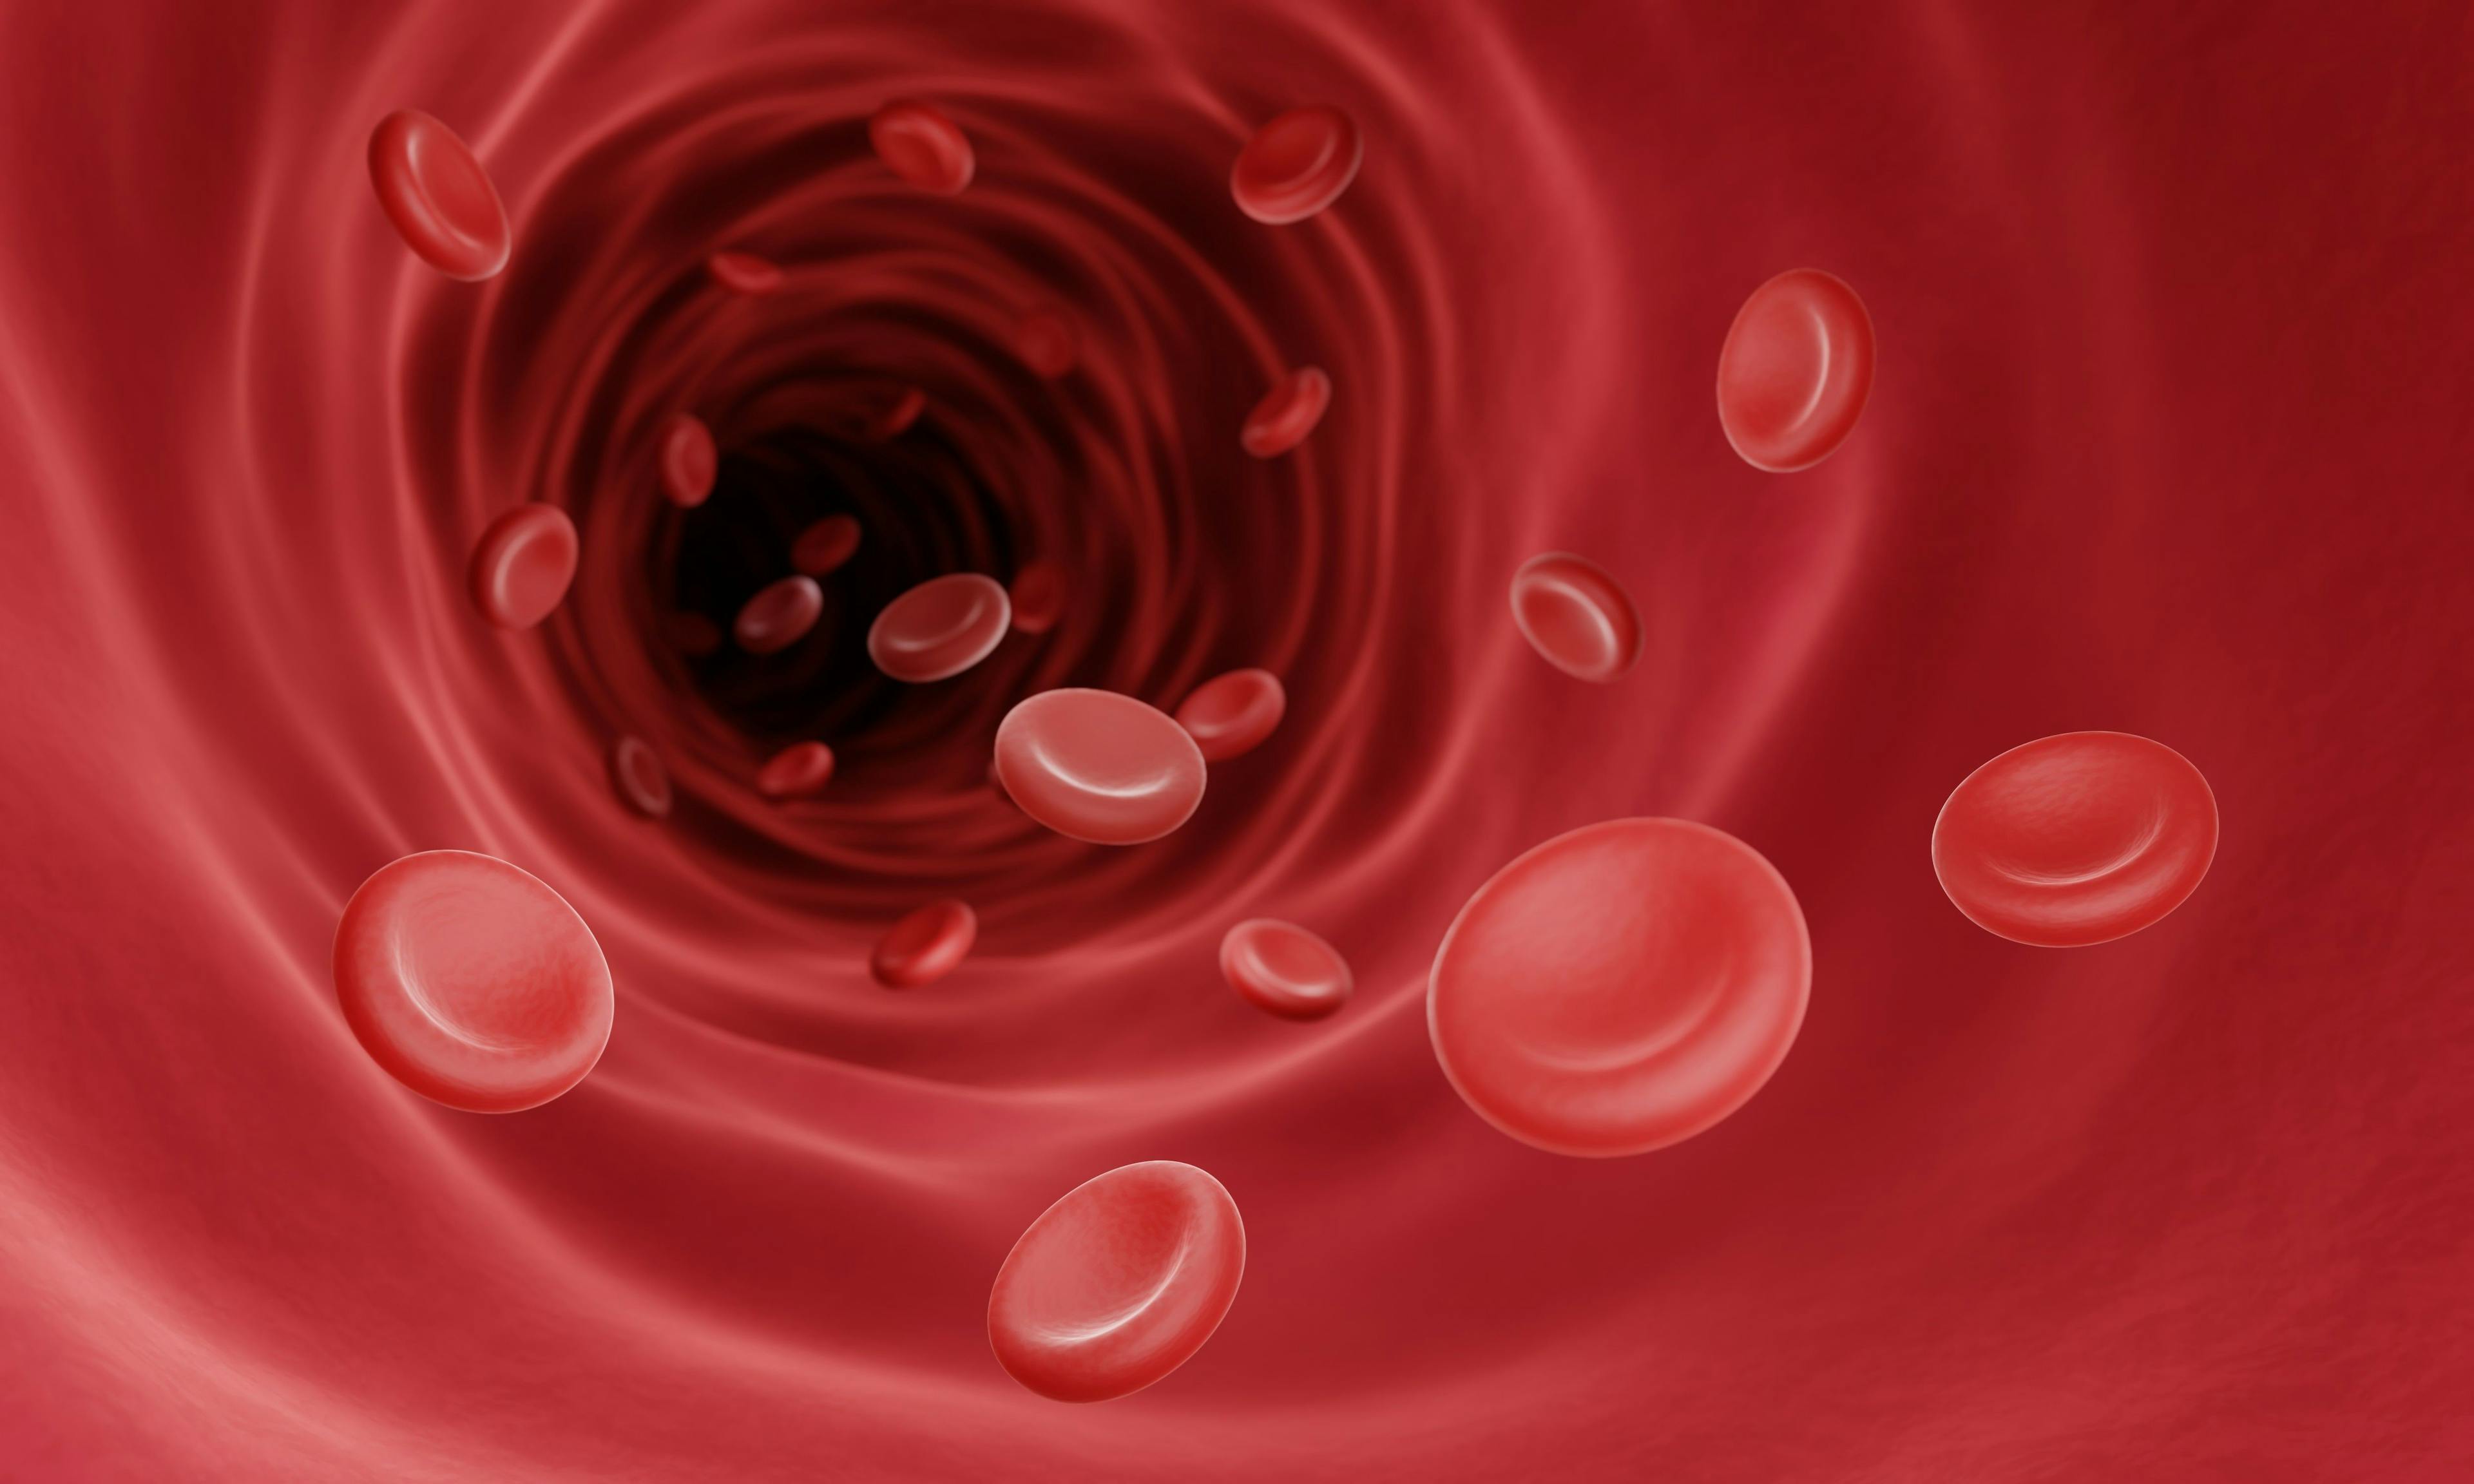 Red Blood Cells in Blood Vessel | image credit: Artur - stock.adobe.com